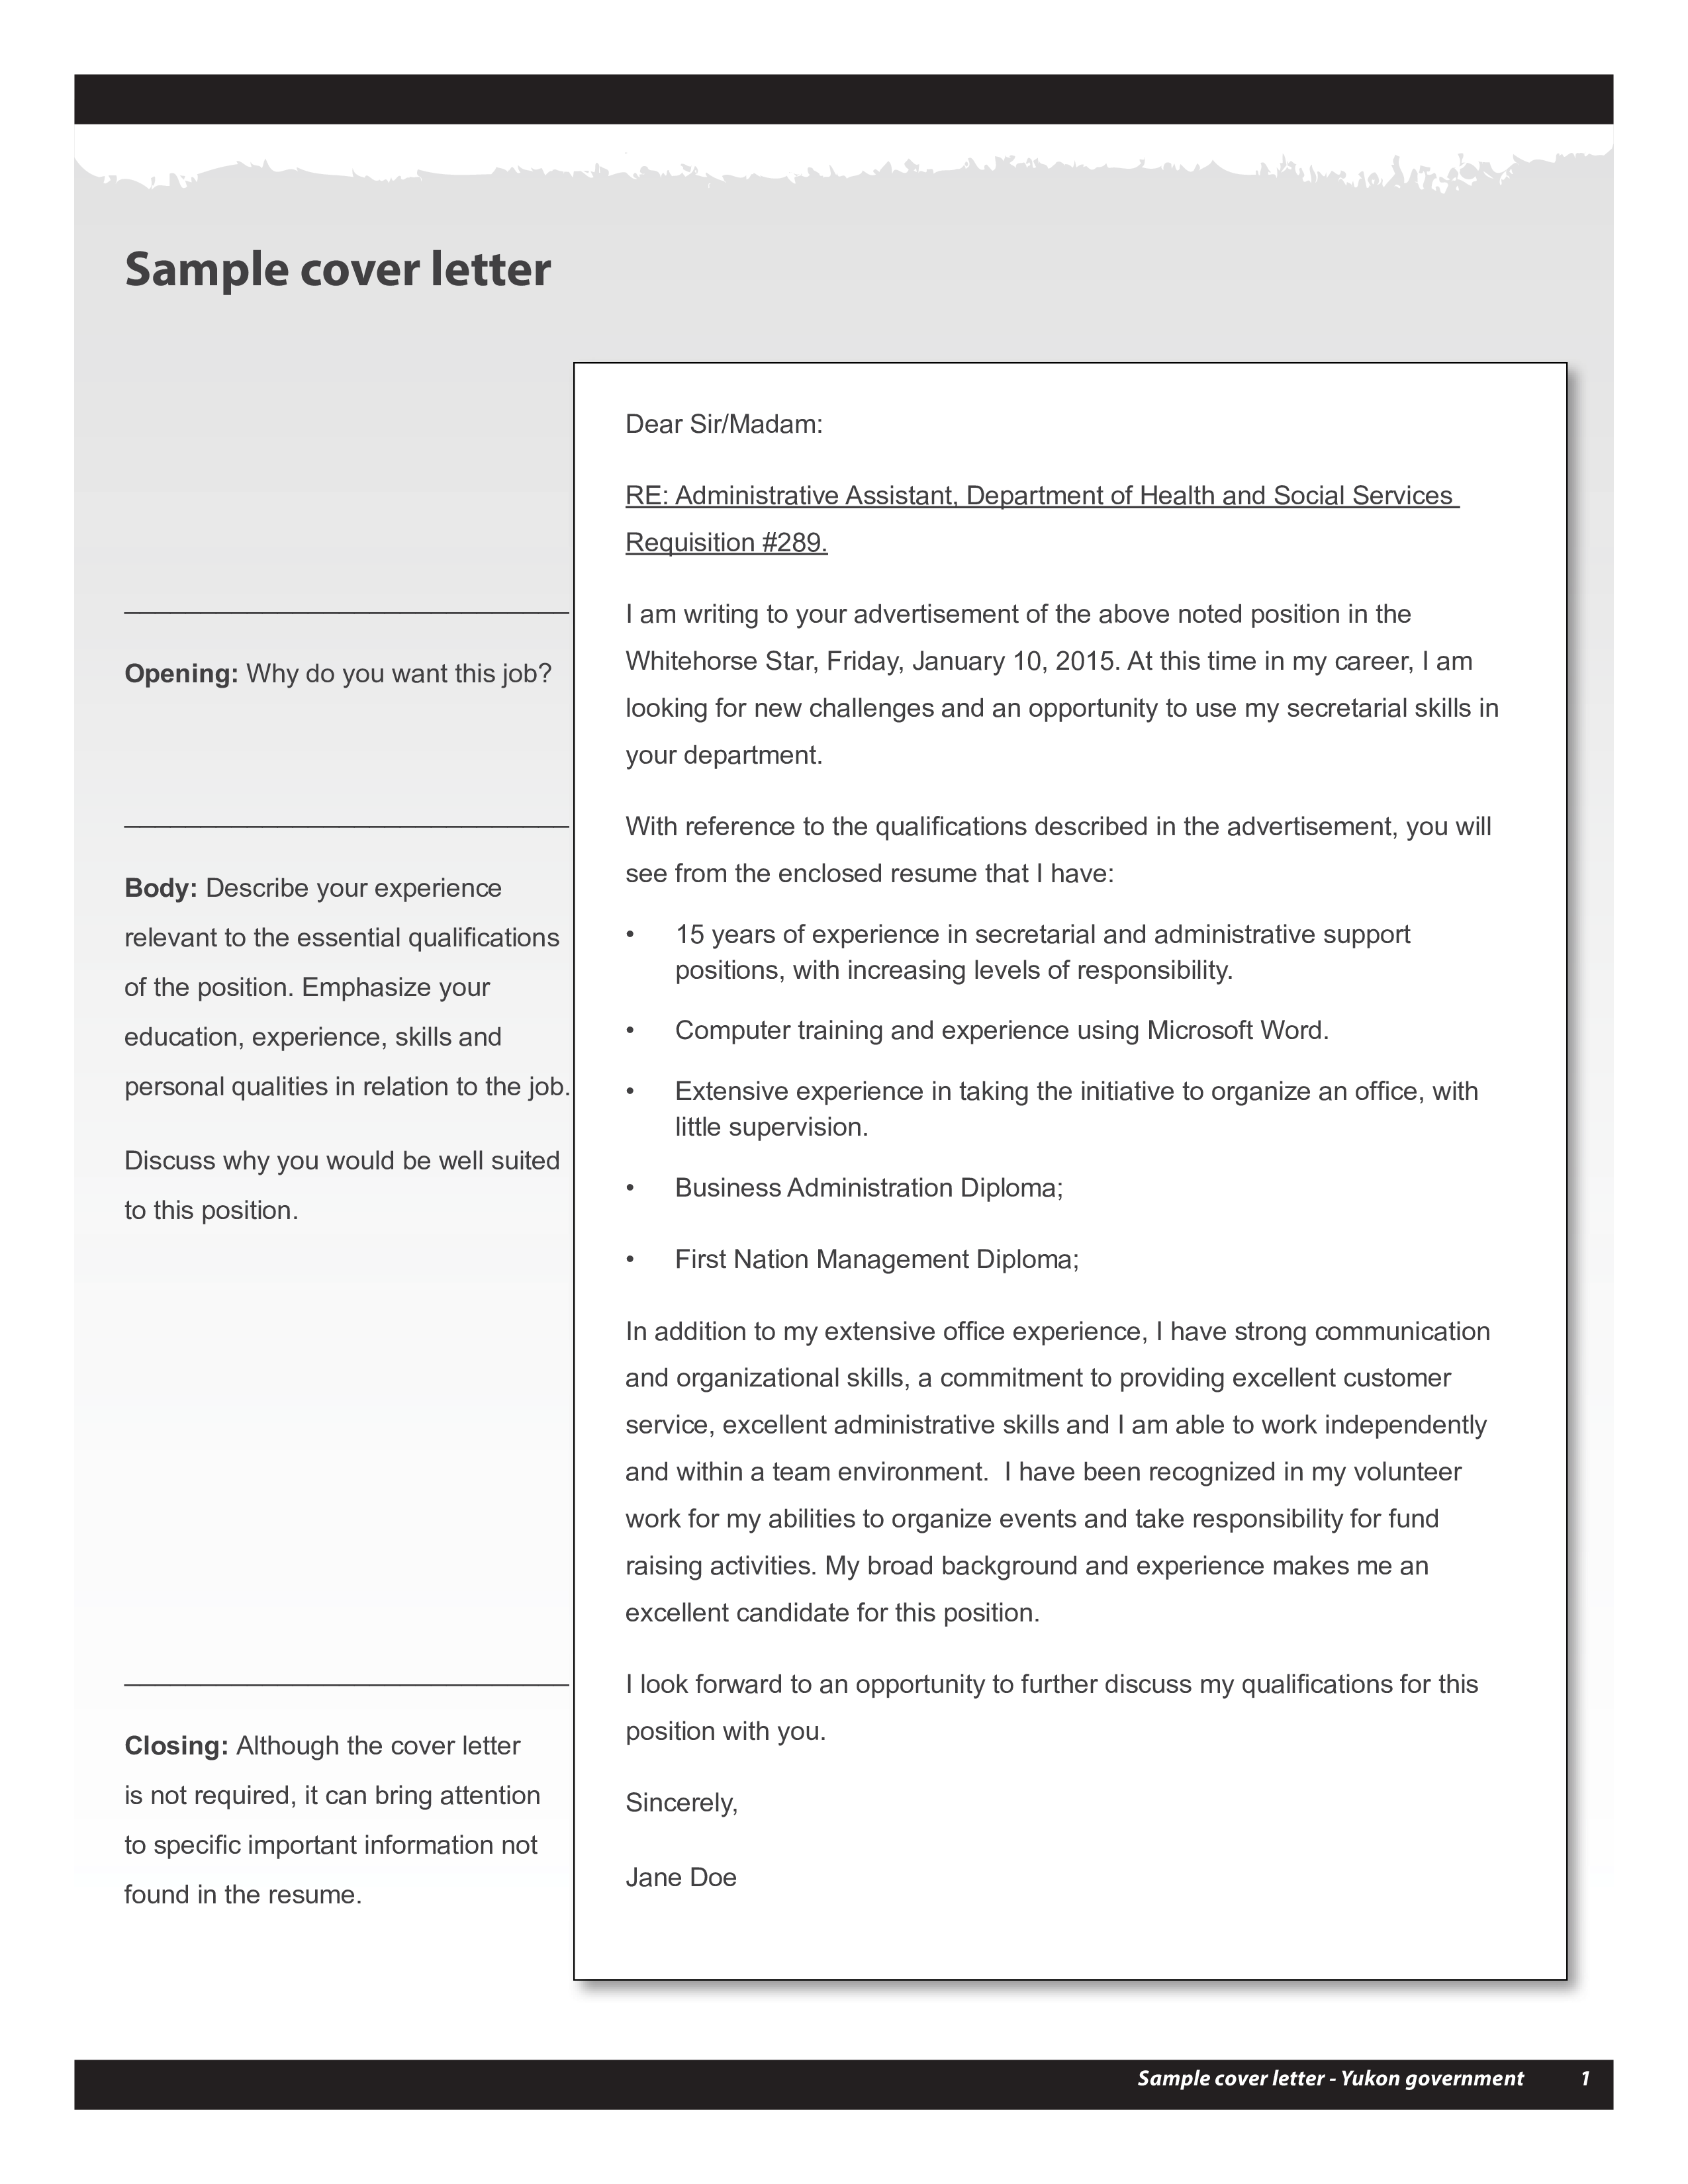 resume application cover letter plantilla imagen principal